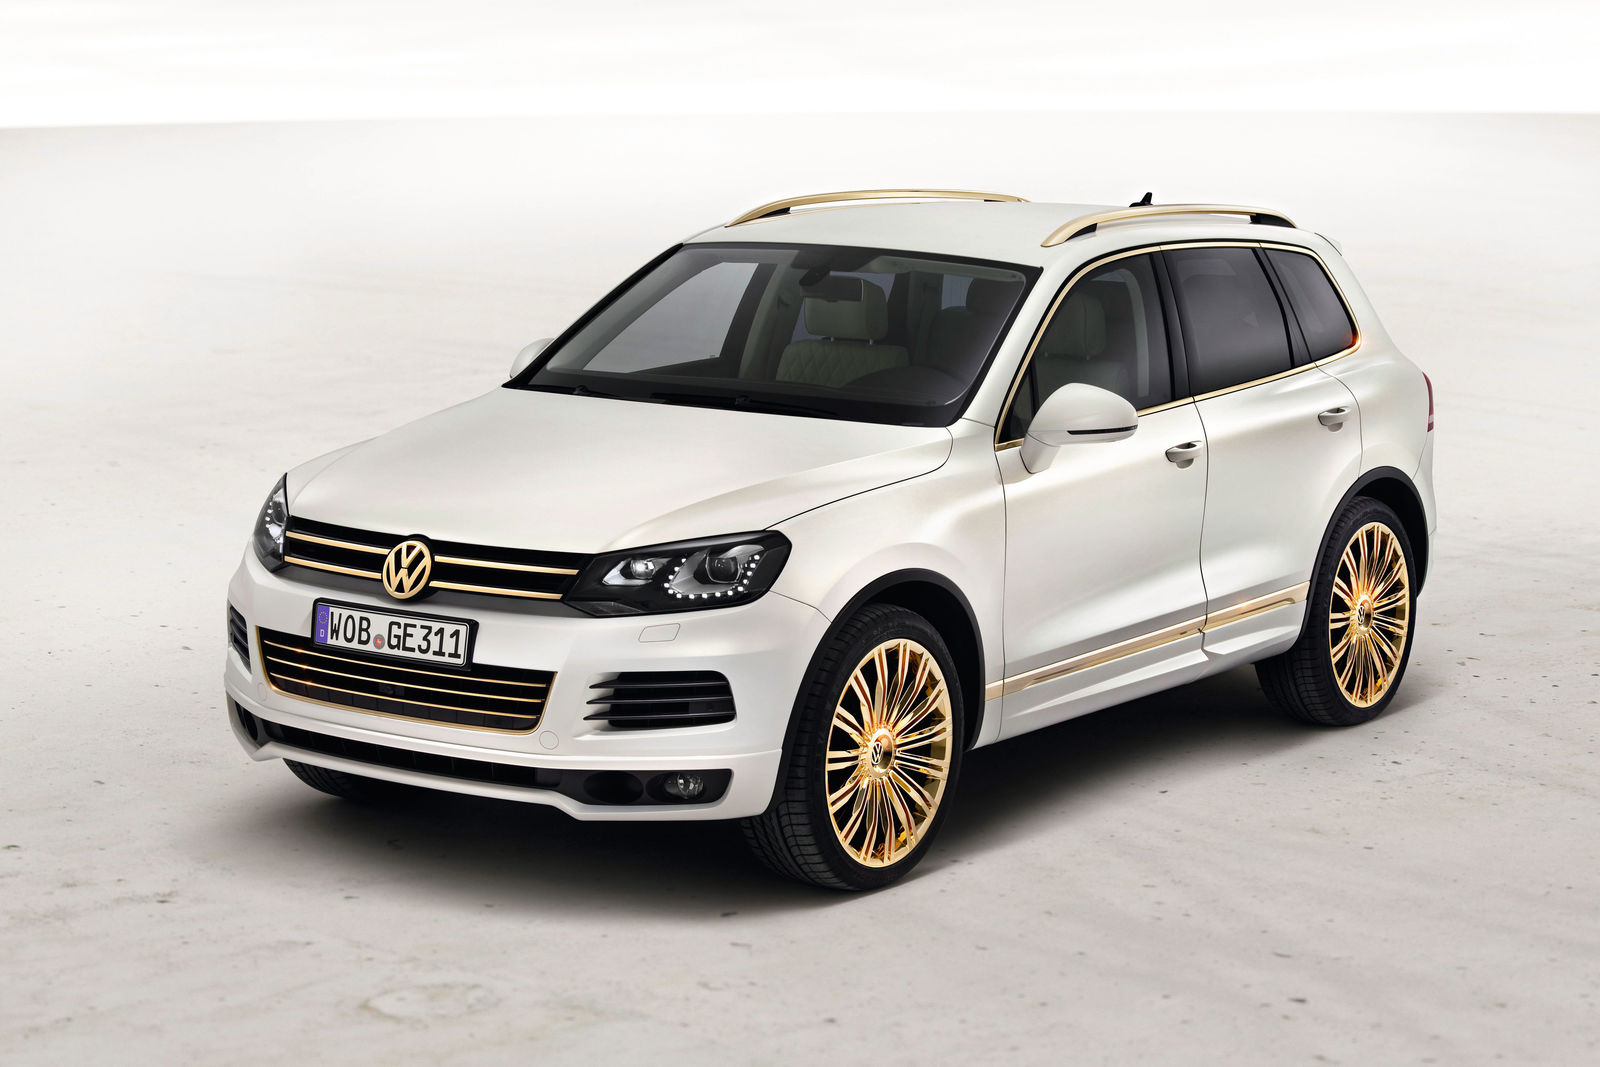 Volkswagen Studie Touareg Gold Edition